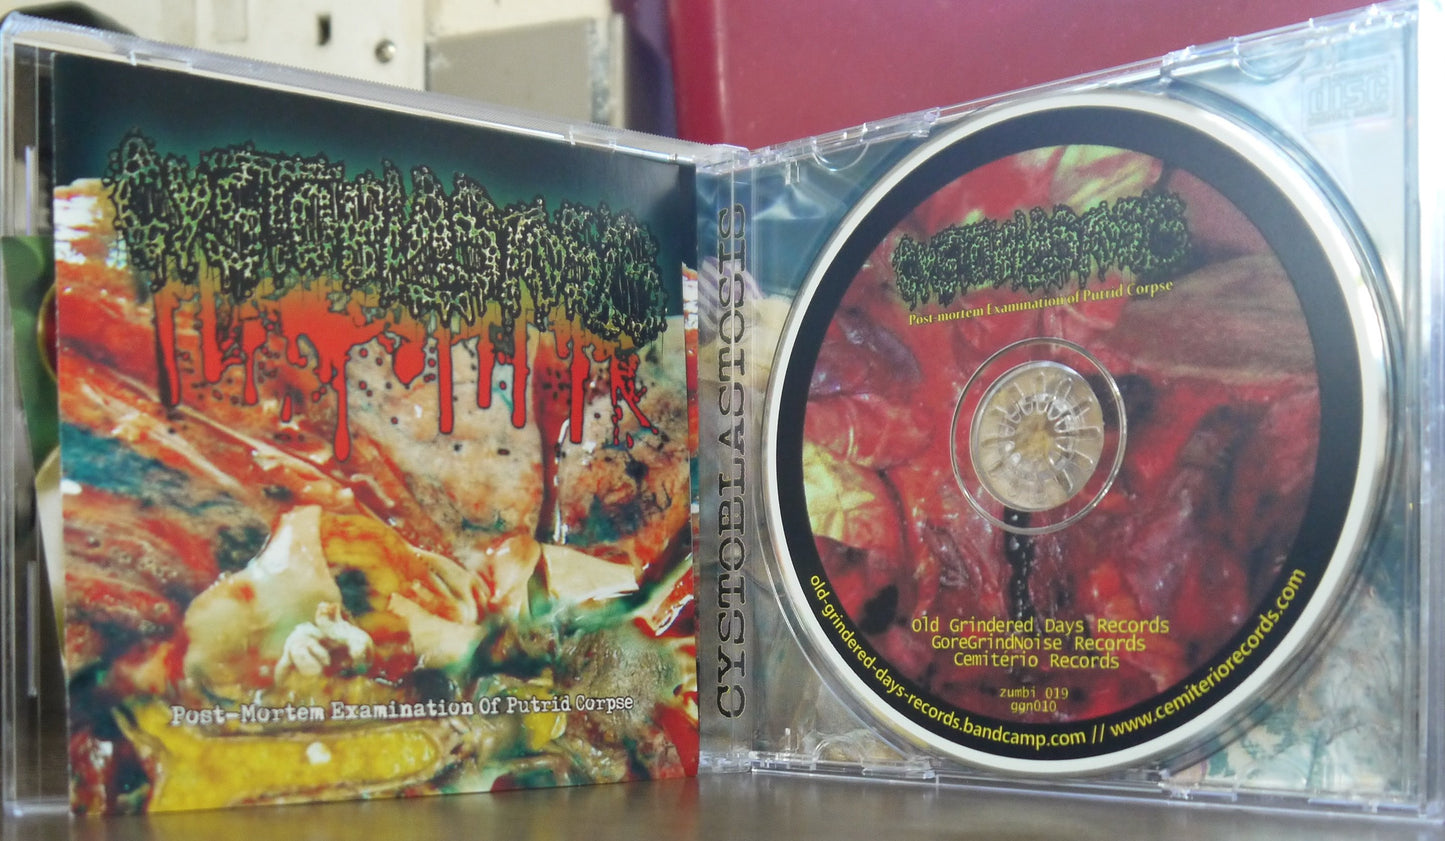 CYSTOBLASTOSIS "Post-Mortem Examination Of Putrid Corpse" CD